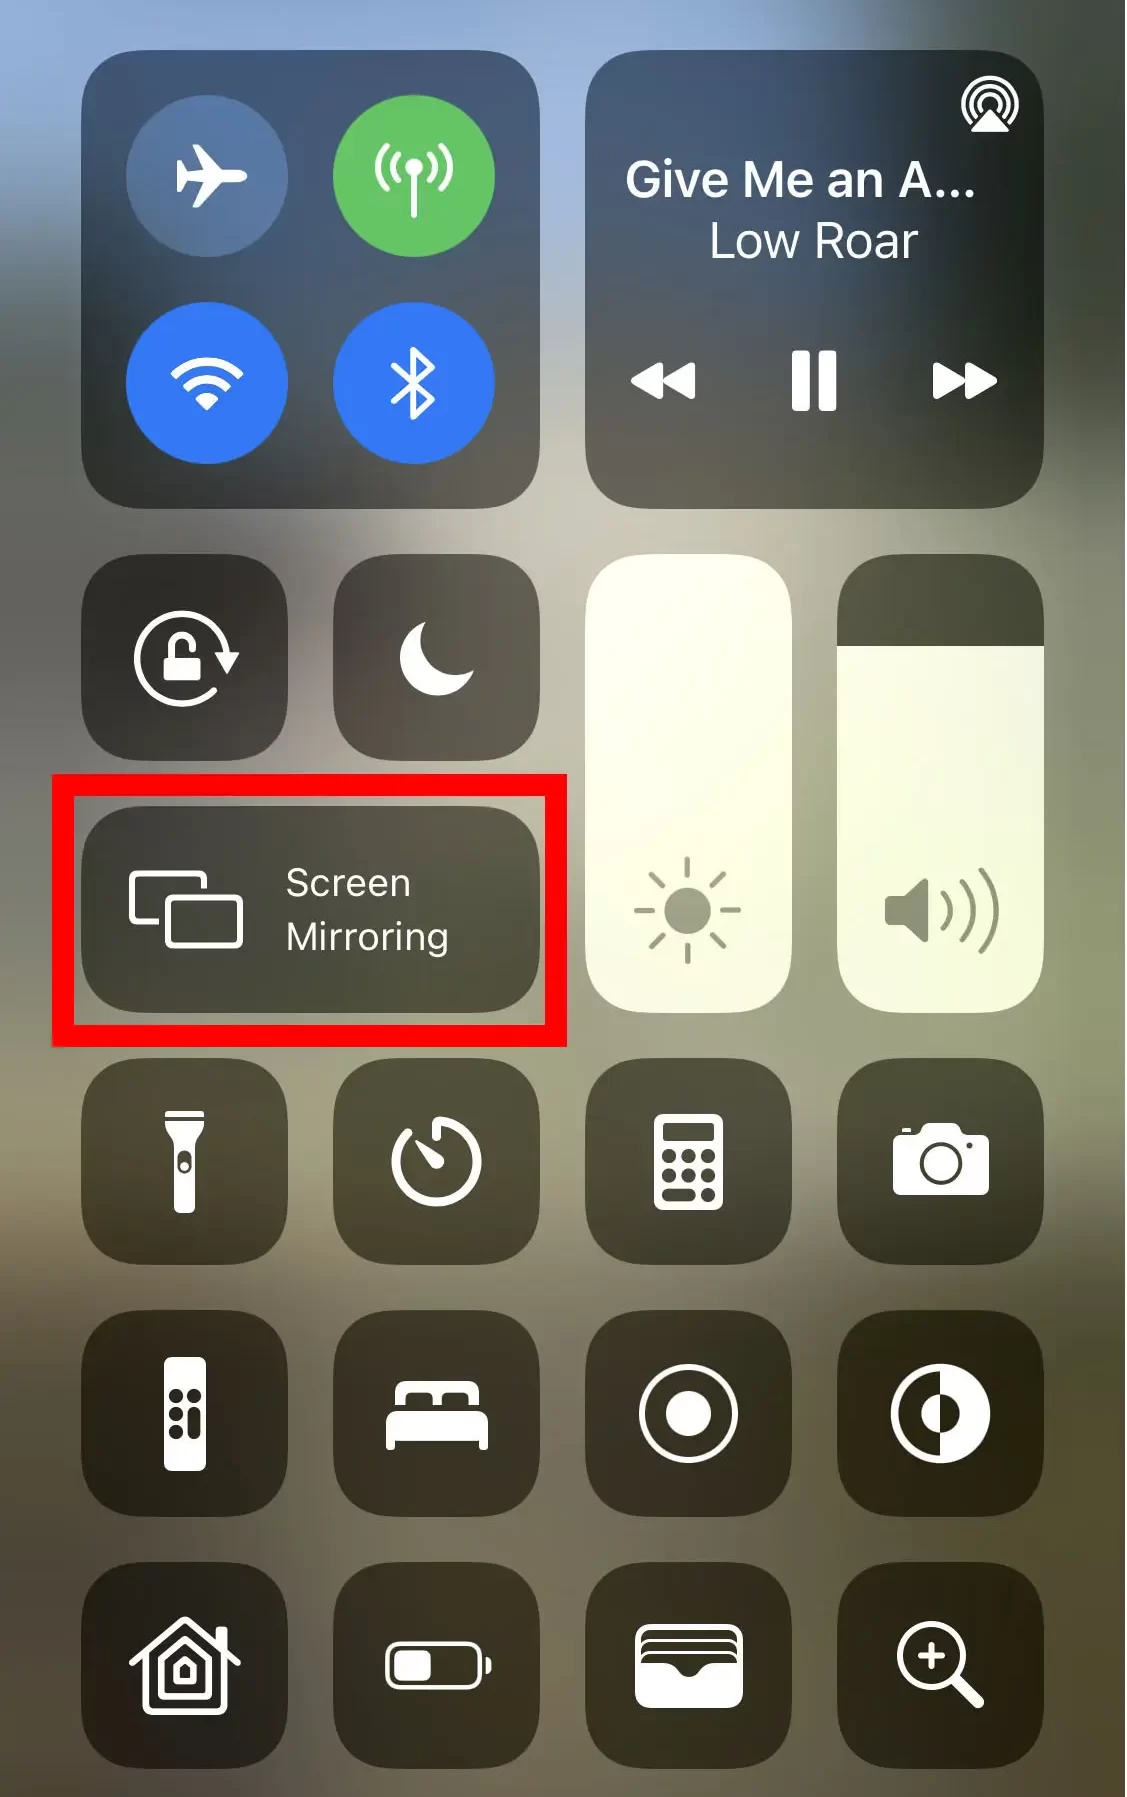 screen mirroring option on iPhone 